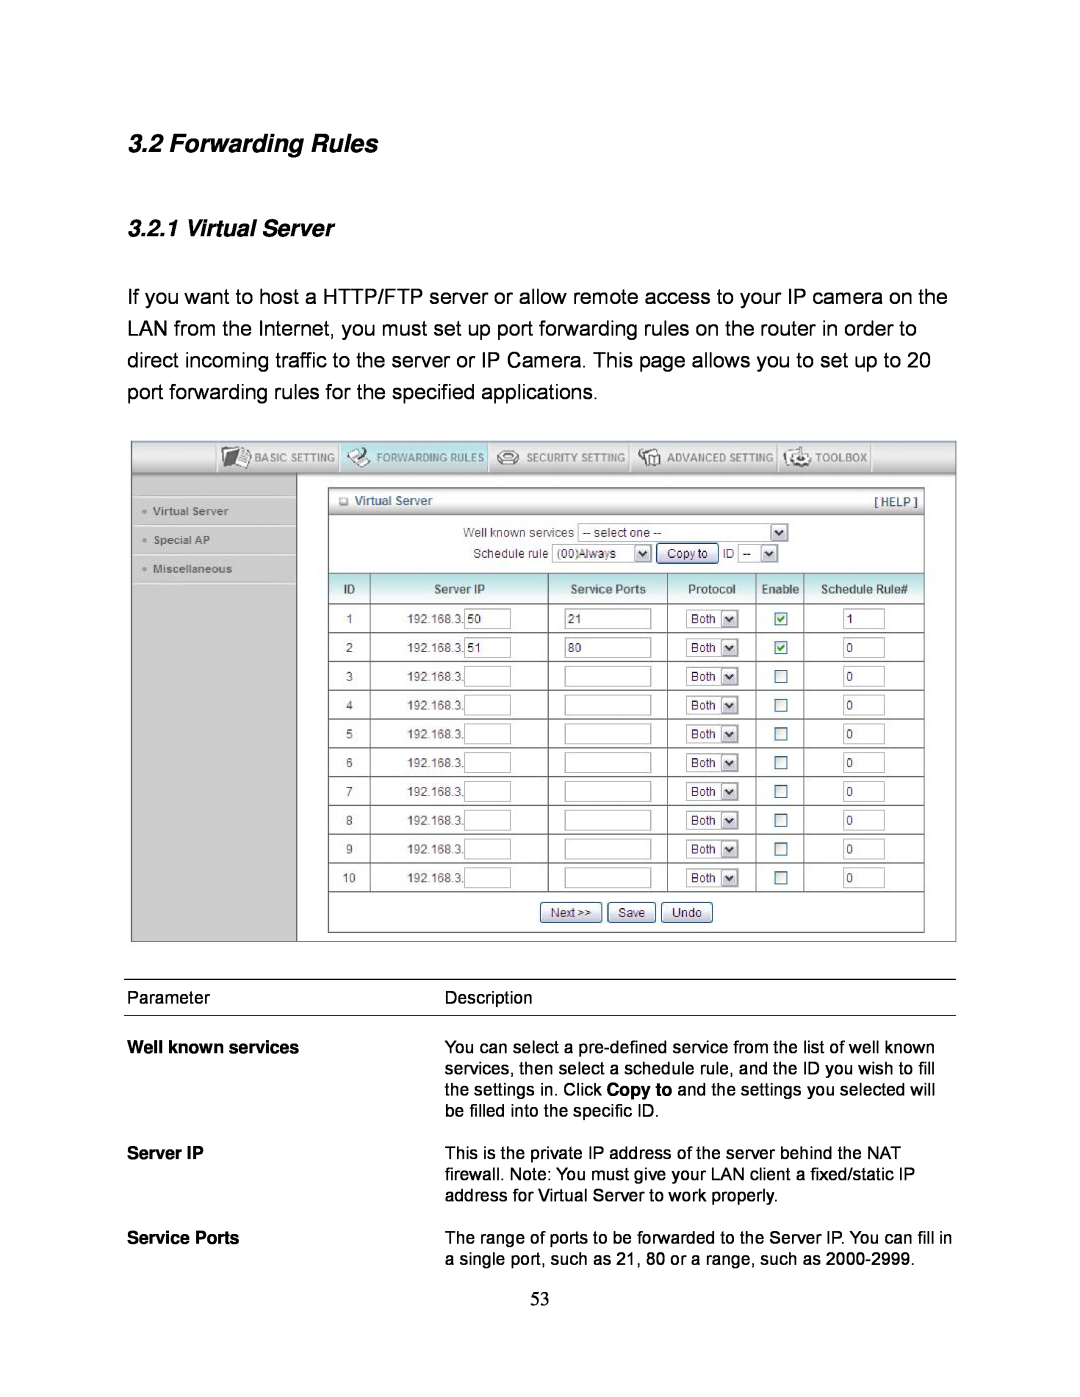 Airlink101 AR695W manual Forwarding Rules, Virtual Server 